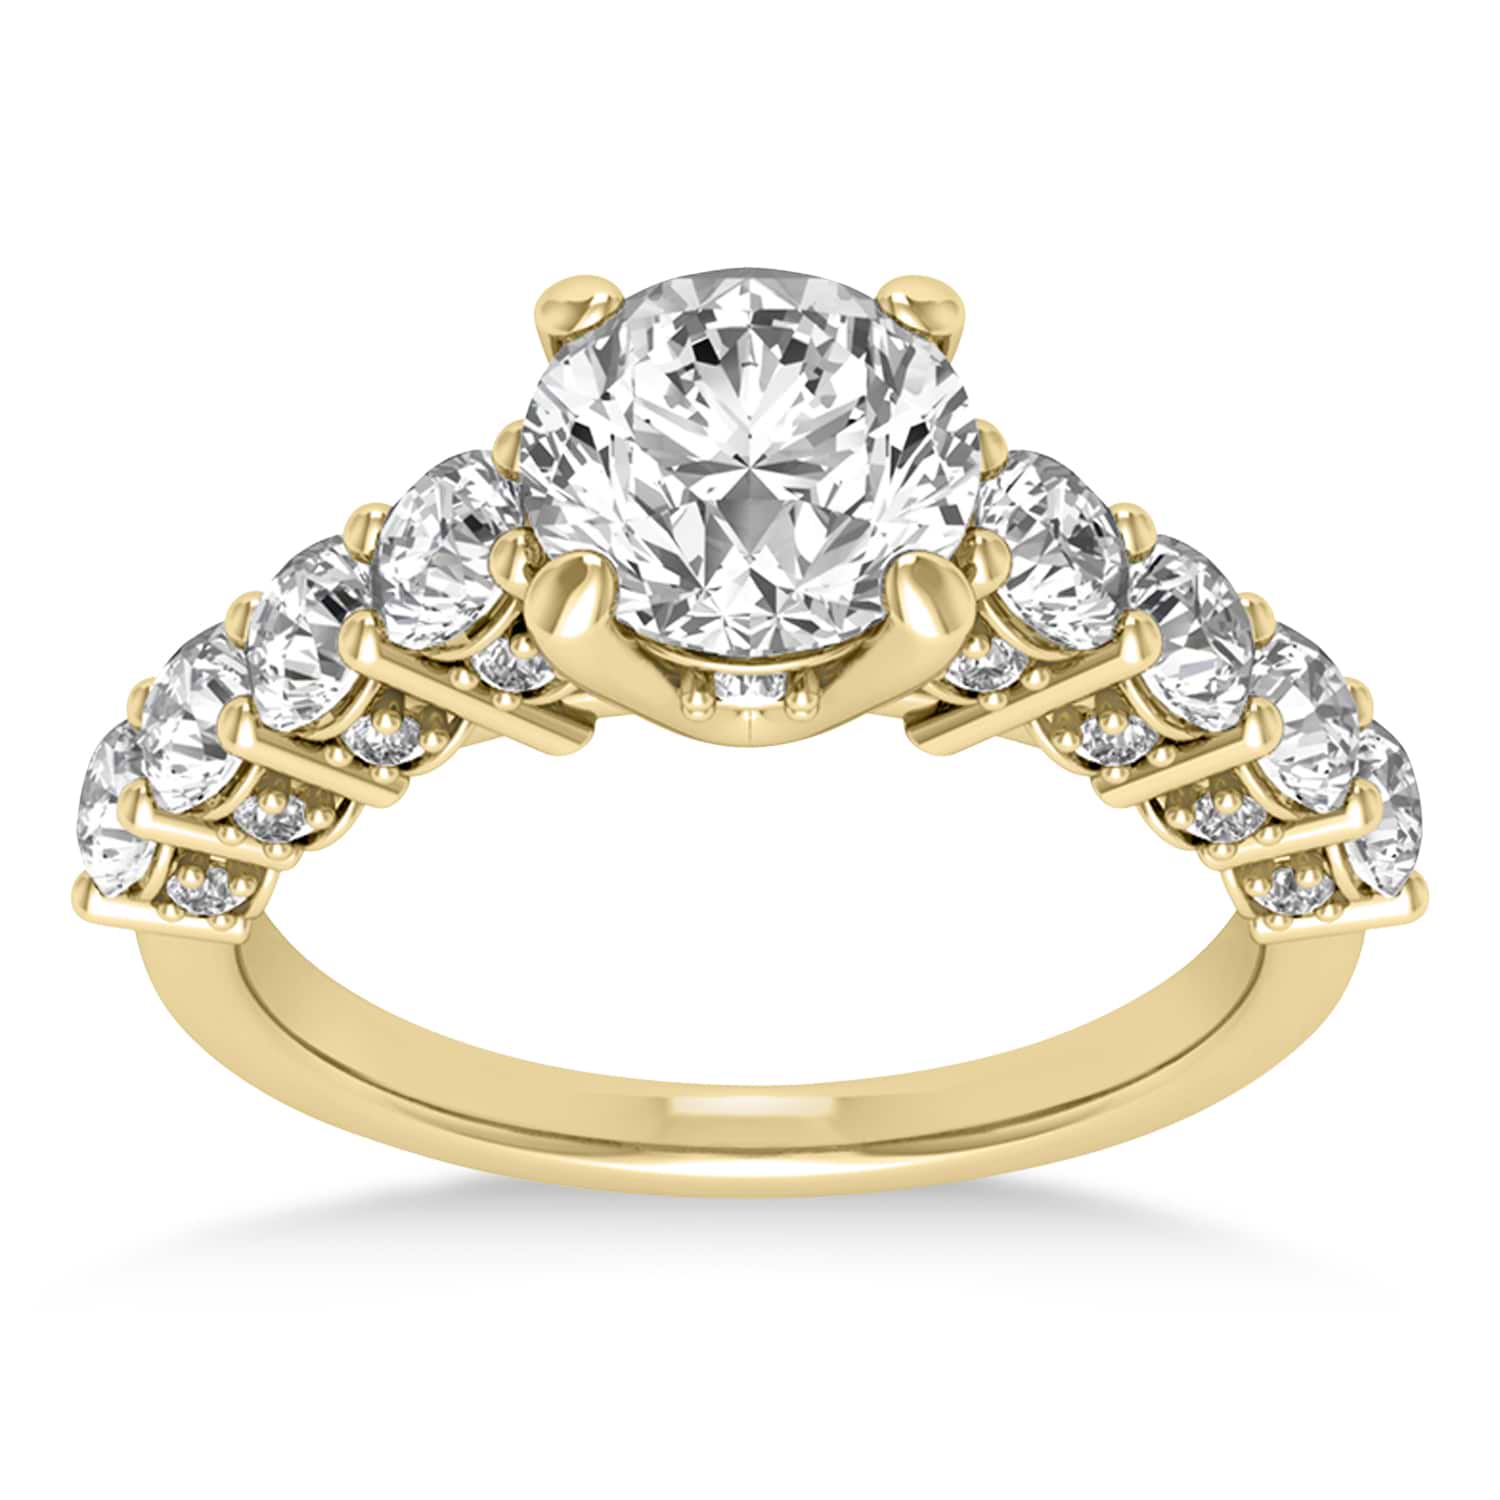 Diamond Prong Set Engagement Ring 14k Yellow Gold (1.06ct)